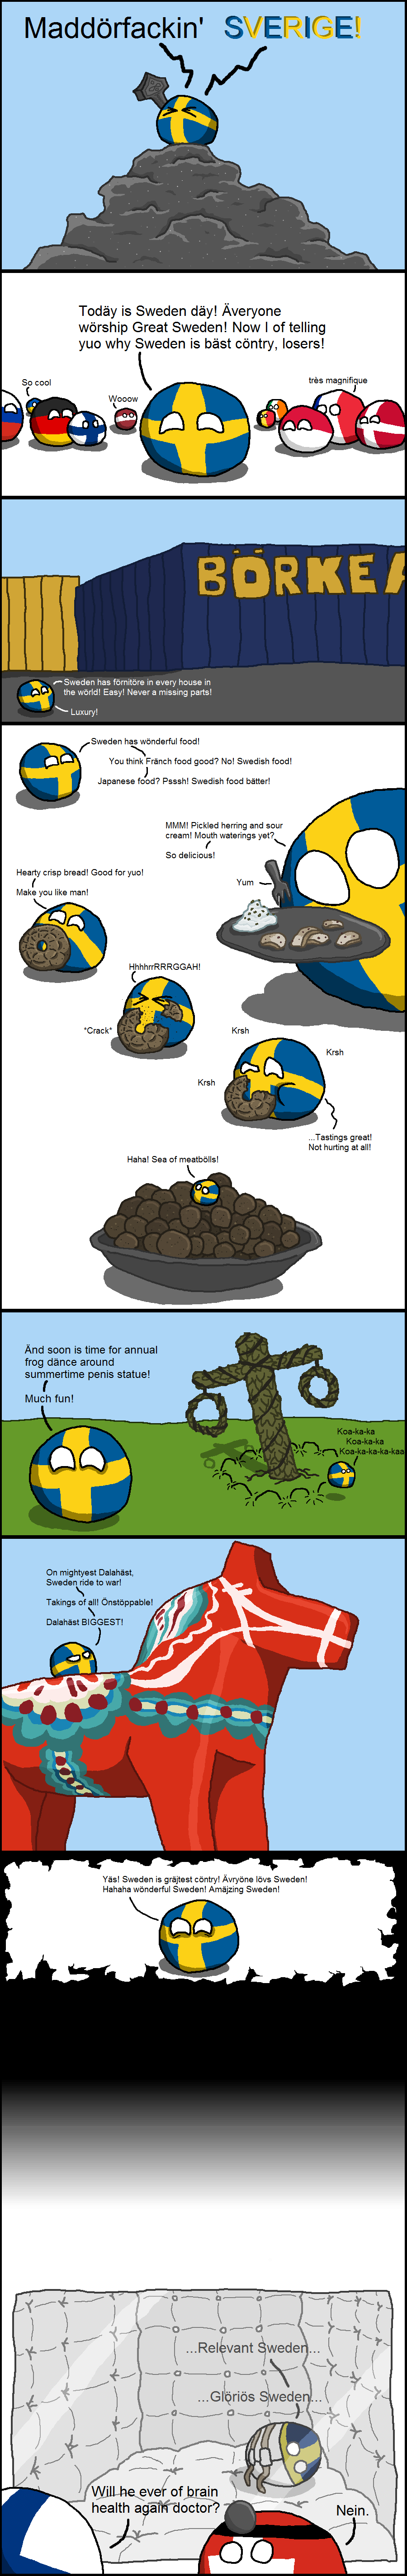 Polandball Comics Sweden+s+health_133821_4910982